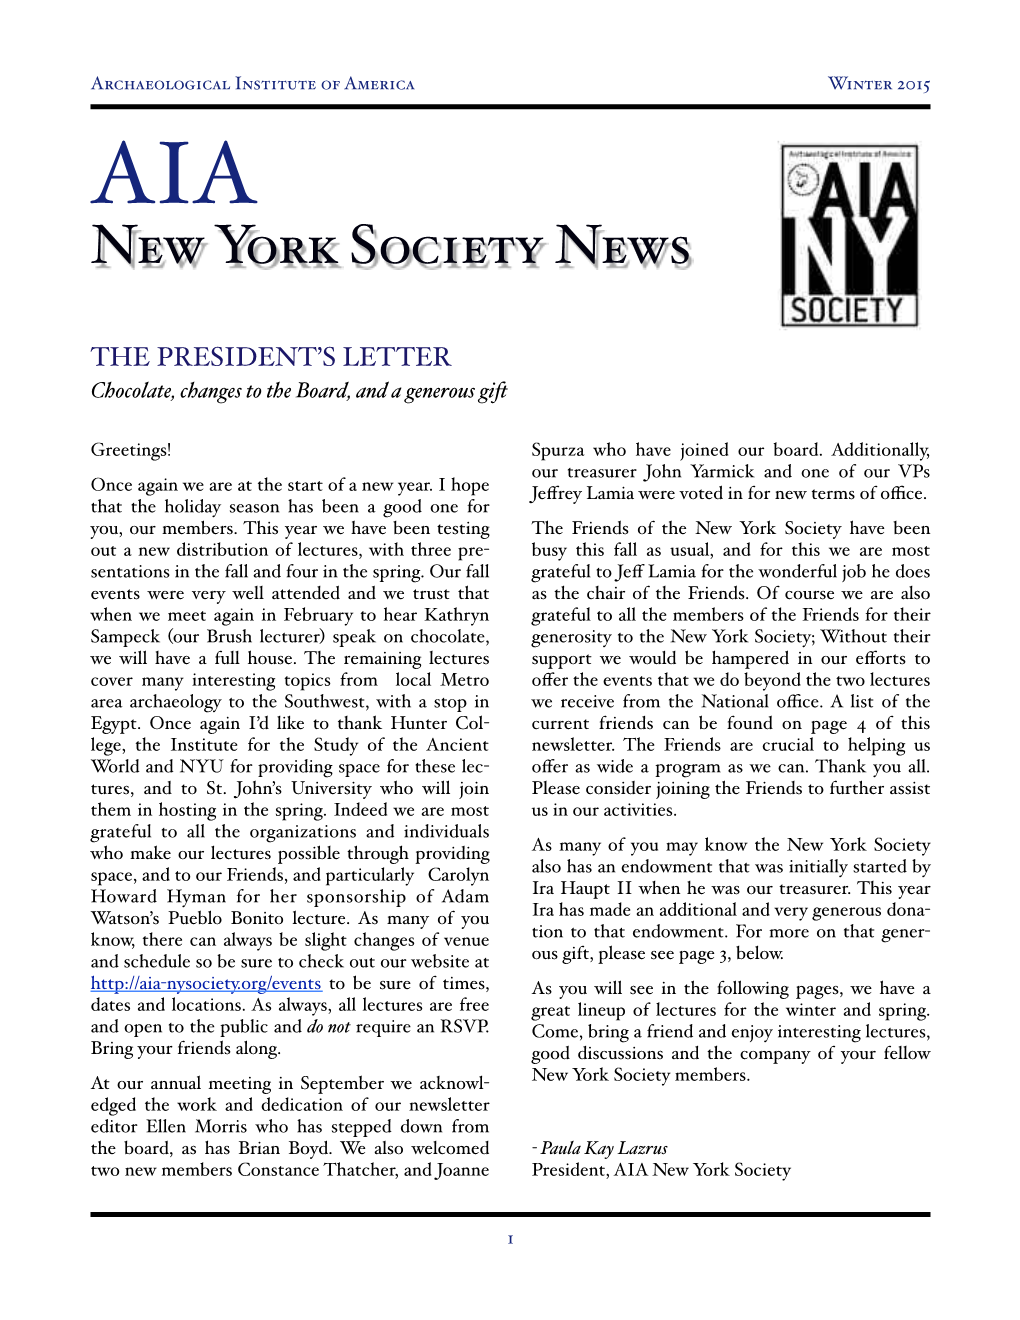 New York Society News